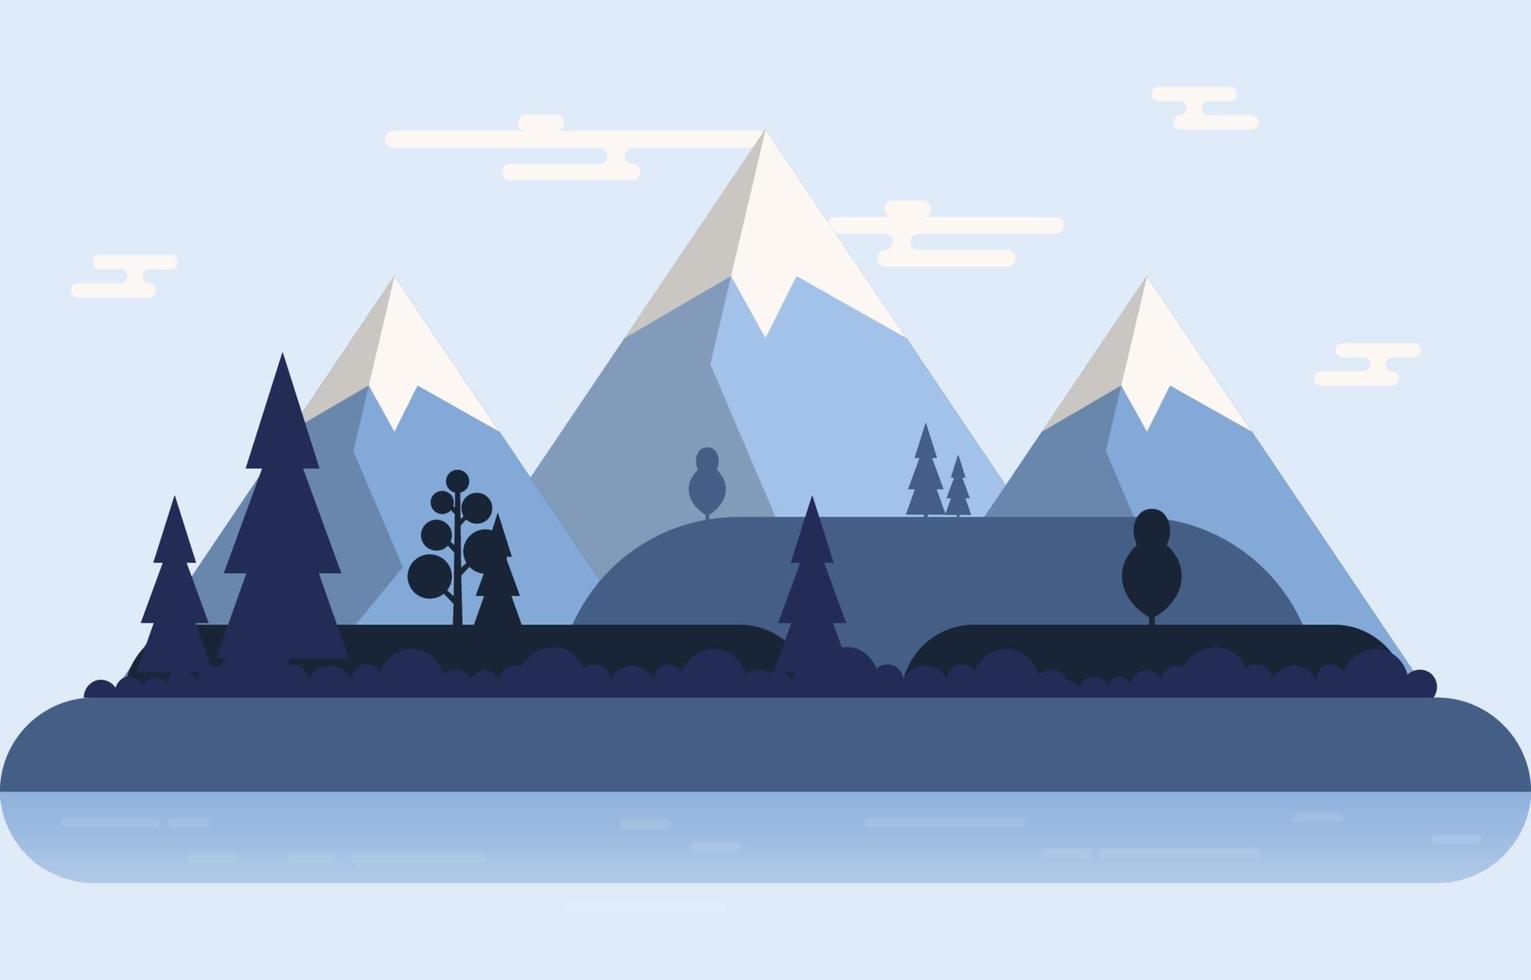 Calm Mountain Forest Nature Scene Illustration vector